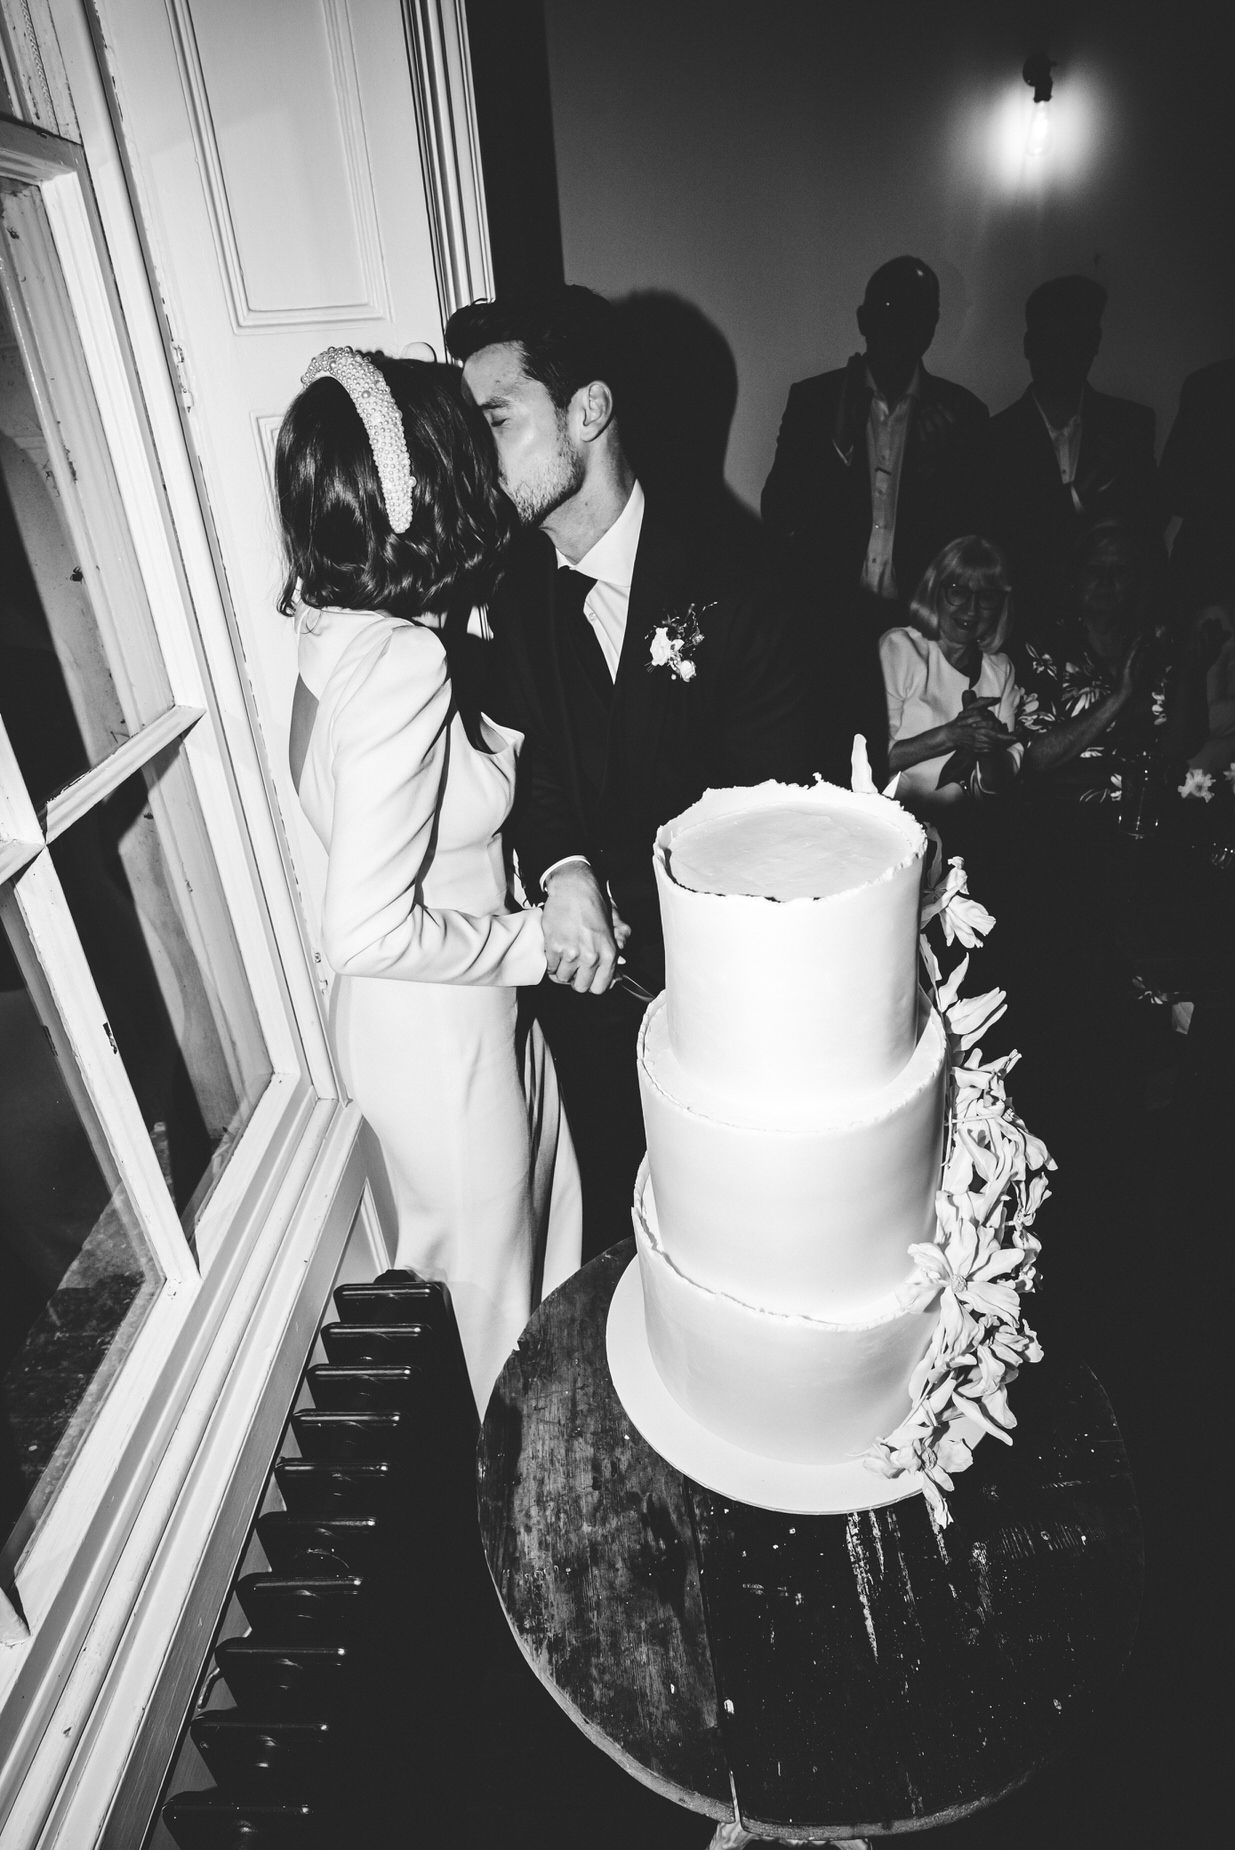 wedding cake, michelle wood photographer, authentic wedding photos, aswarby wedding